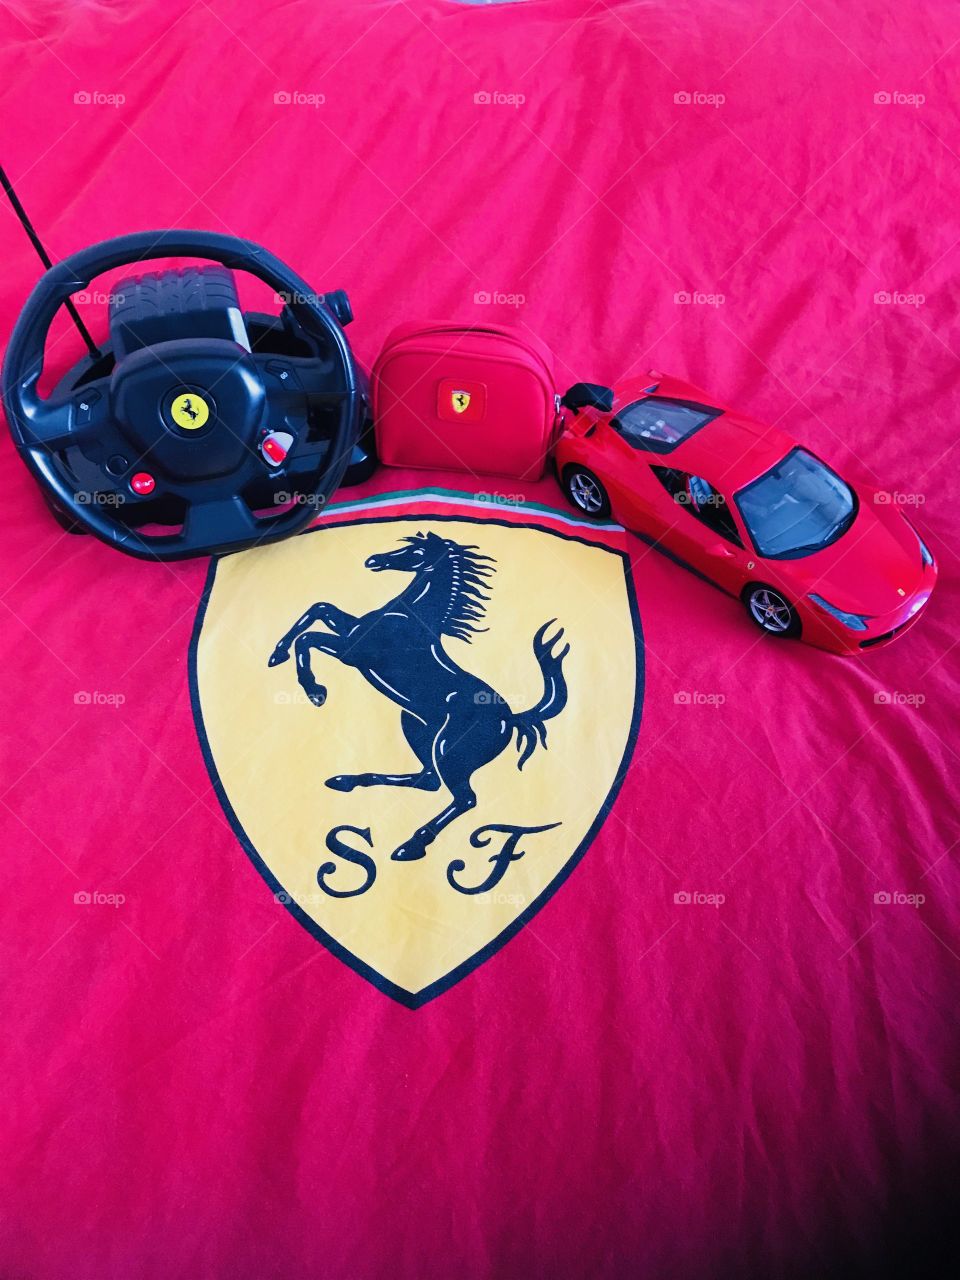 Ferrari toy car and stuff 